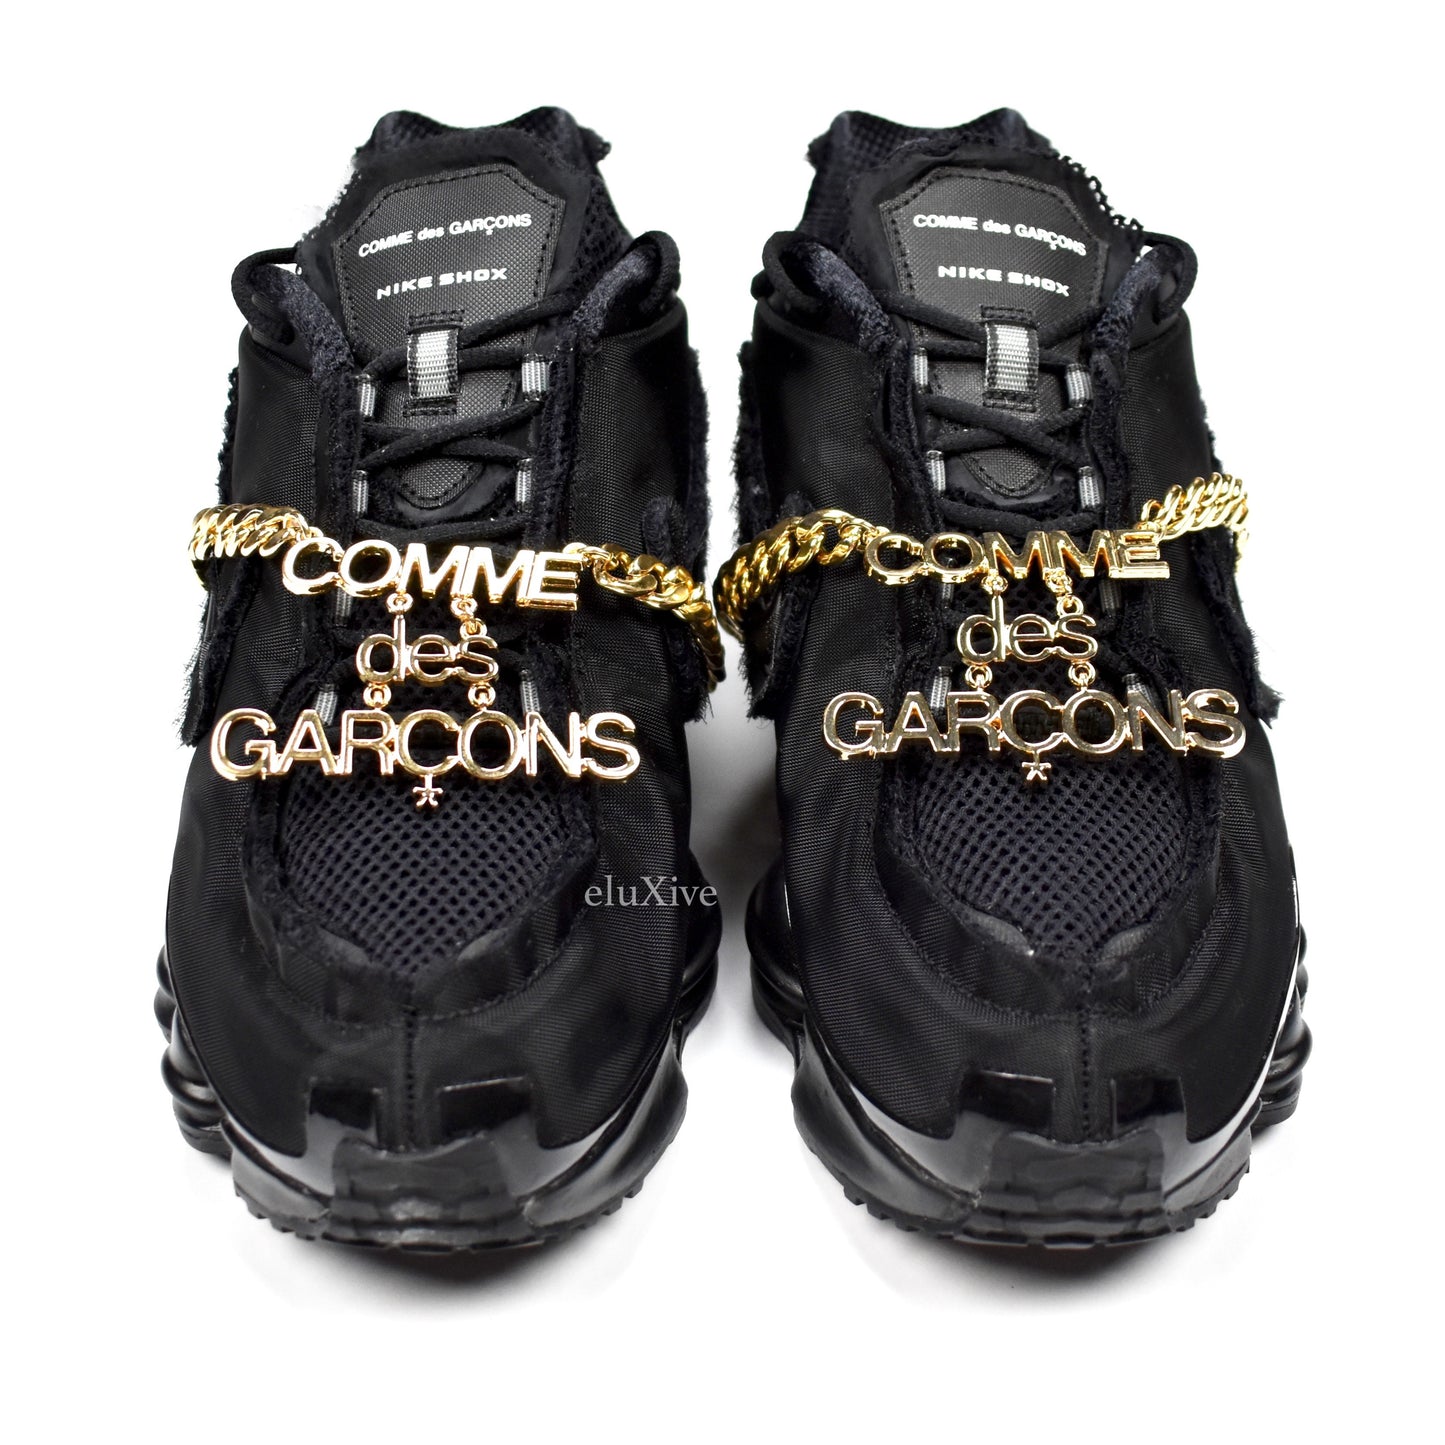 Comme des Garcons x Nike - Shox TL CDG (Black)